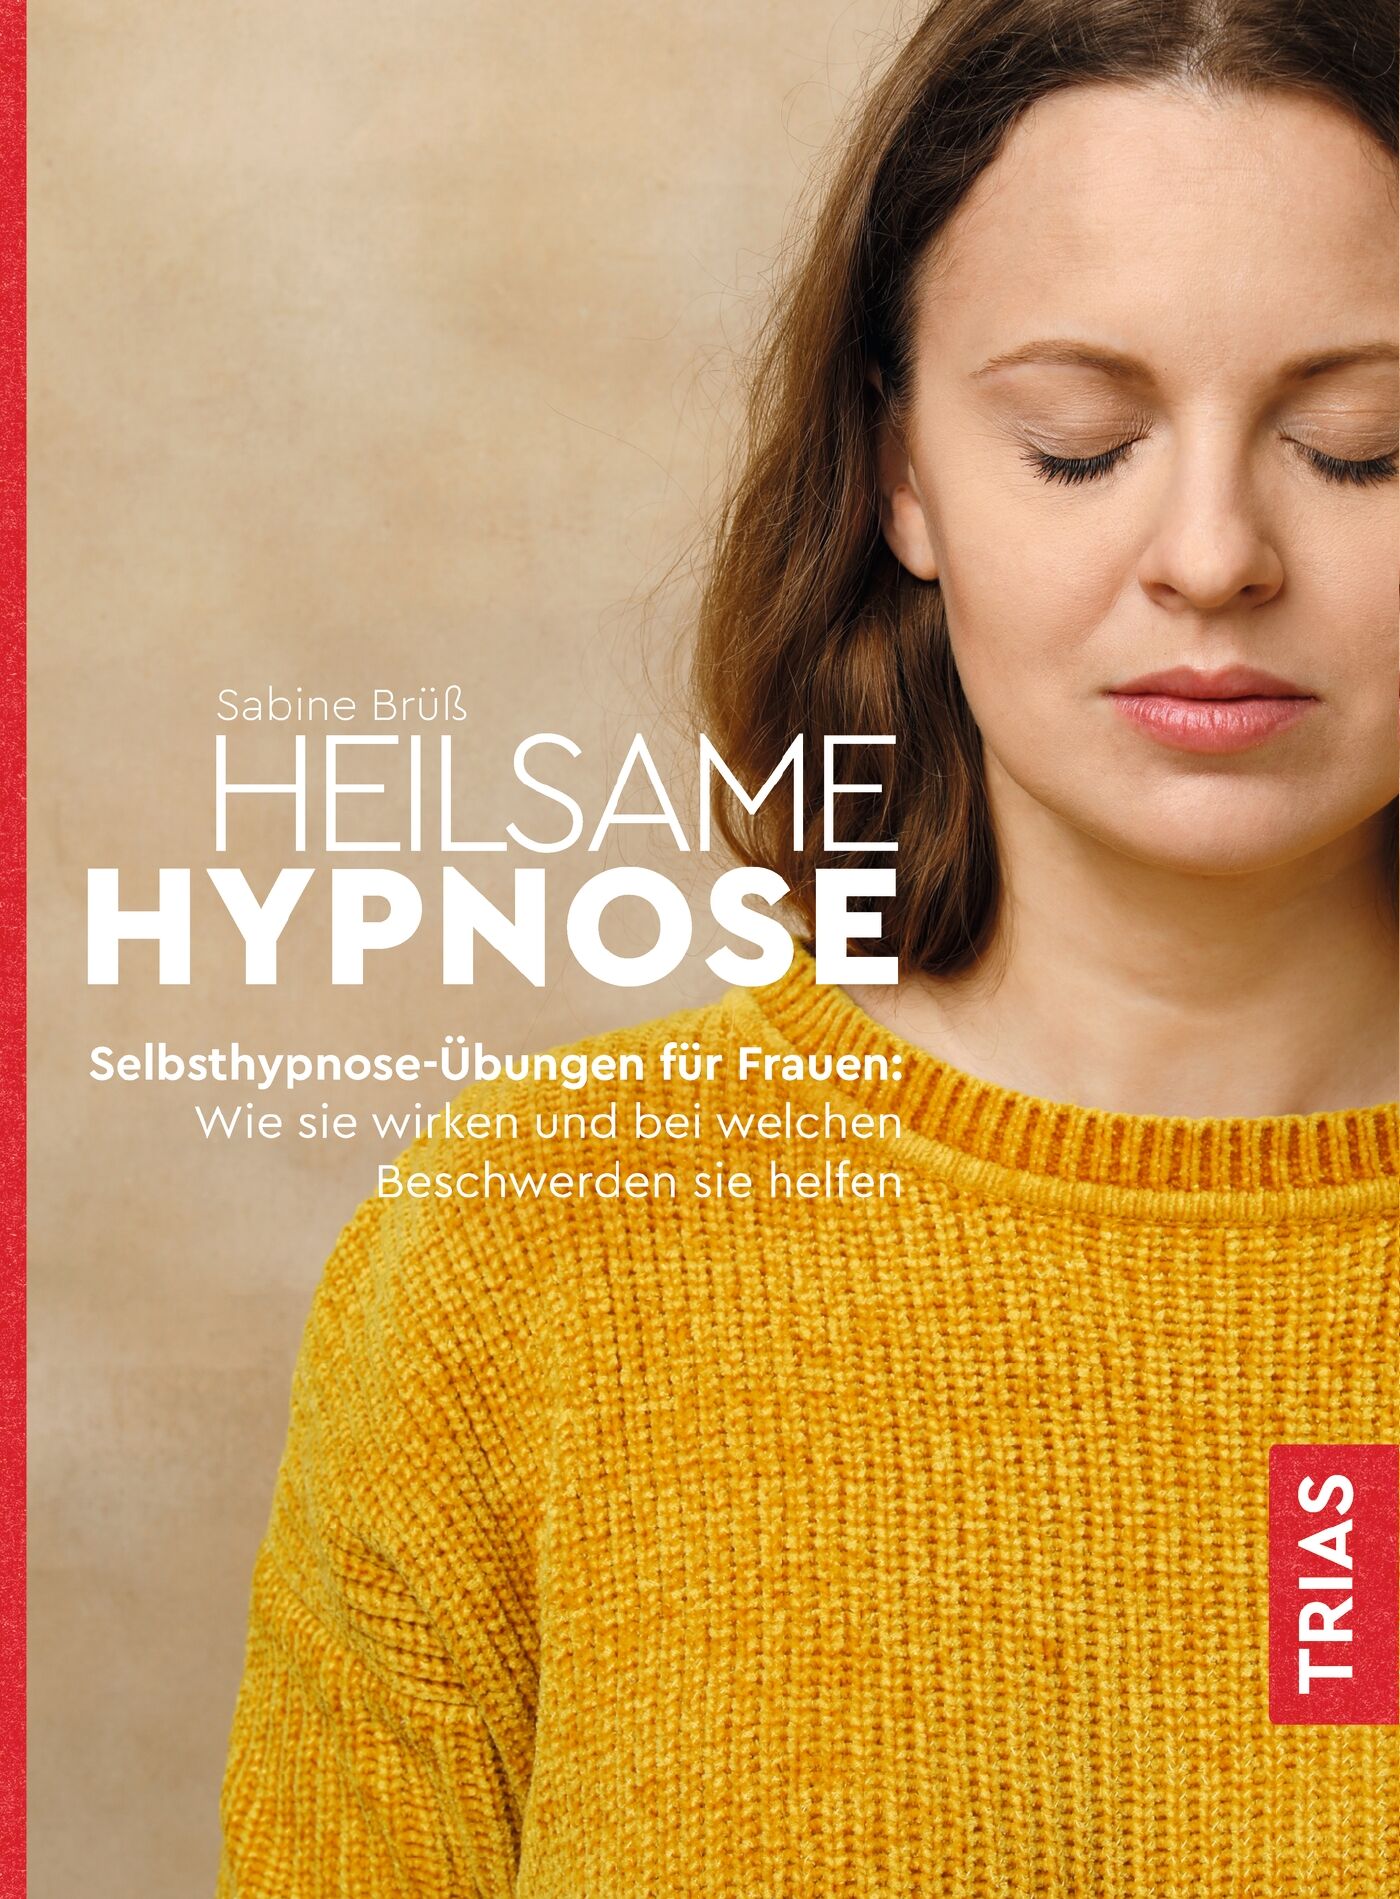 Heilsame Hypnose, 9783432114101